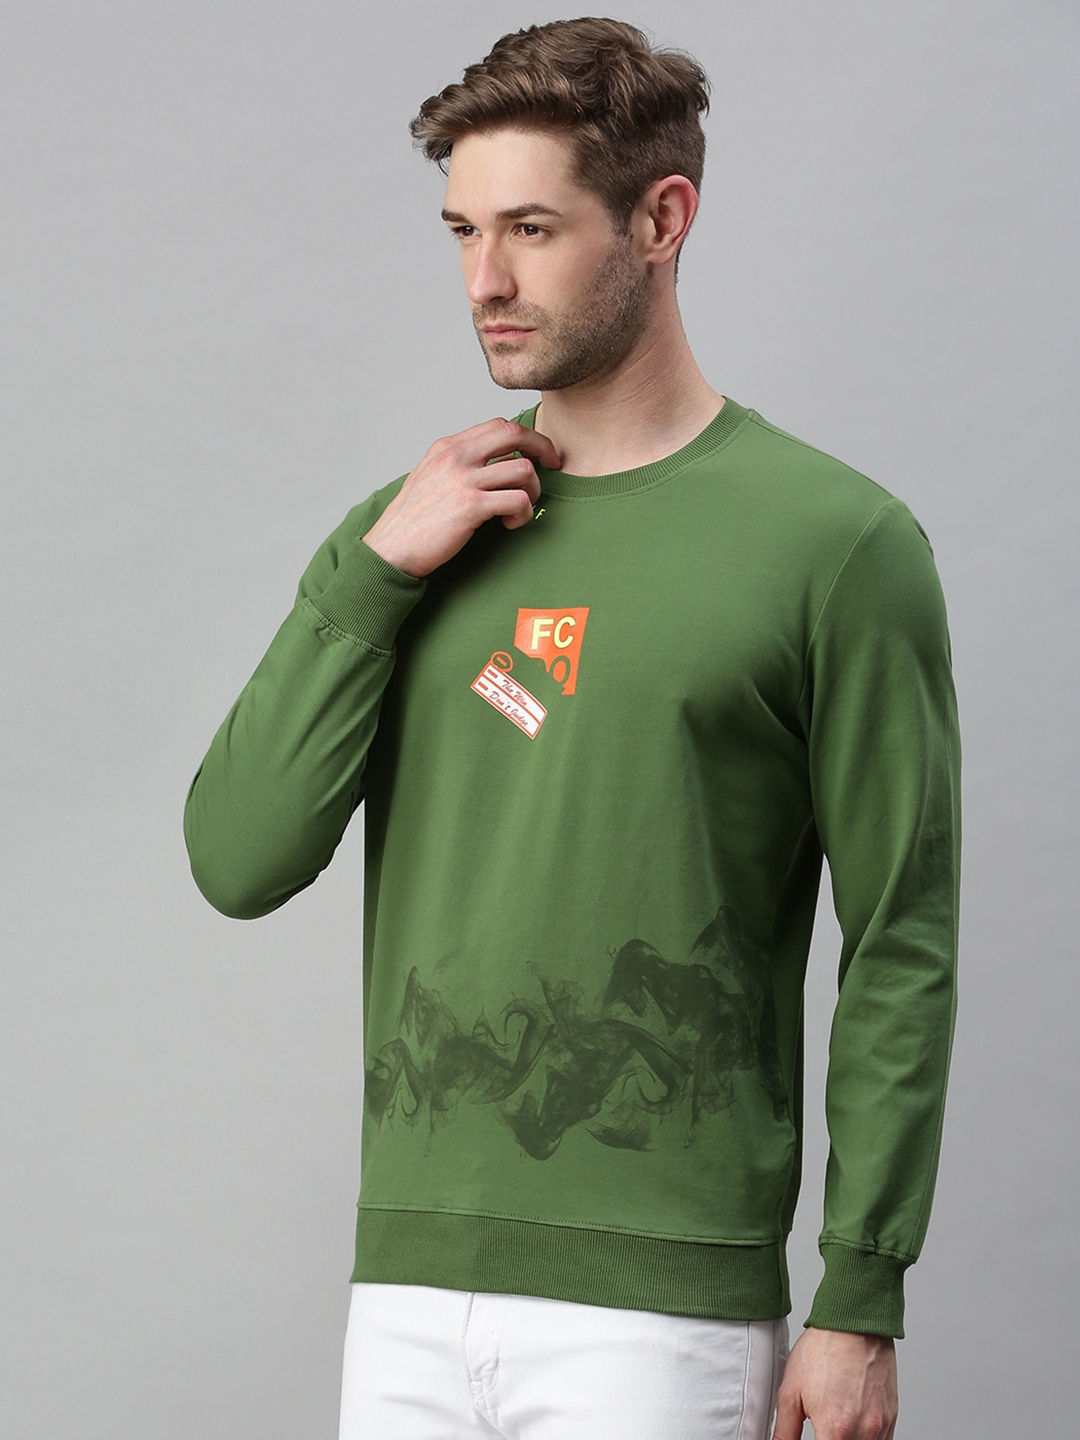 Men's Green Cotton Blend Printed Sweatshirts